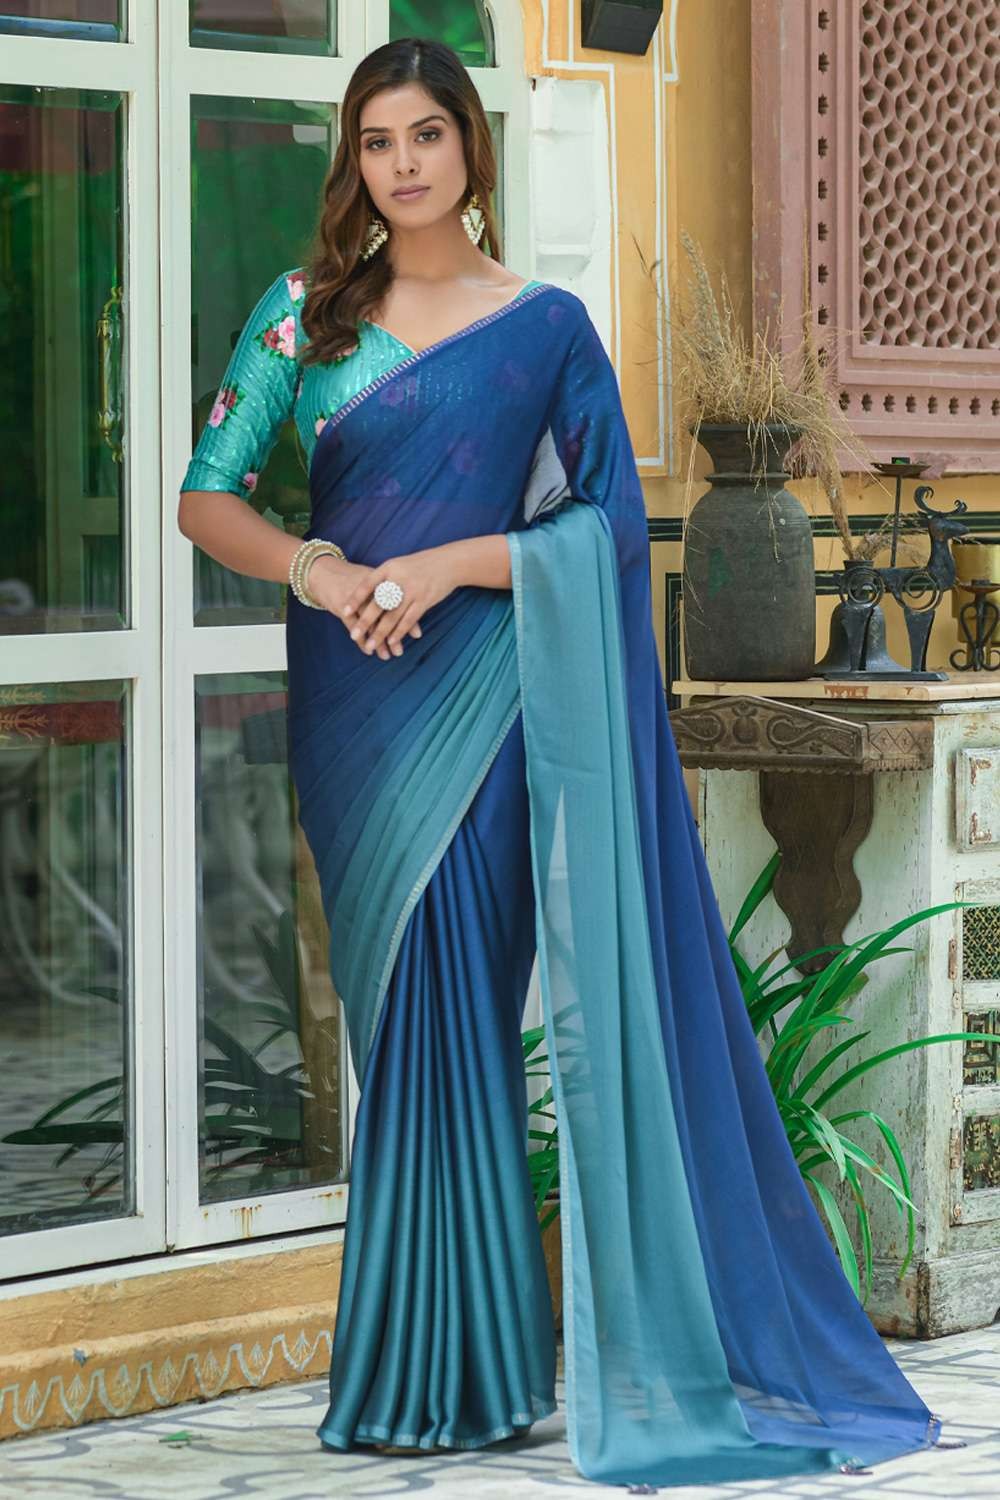 Khushi Kapoor beats the heat in this ice blue sari by Ritika Mirchandani |  Vogue India | Wedding Wardrobe